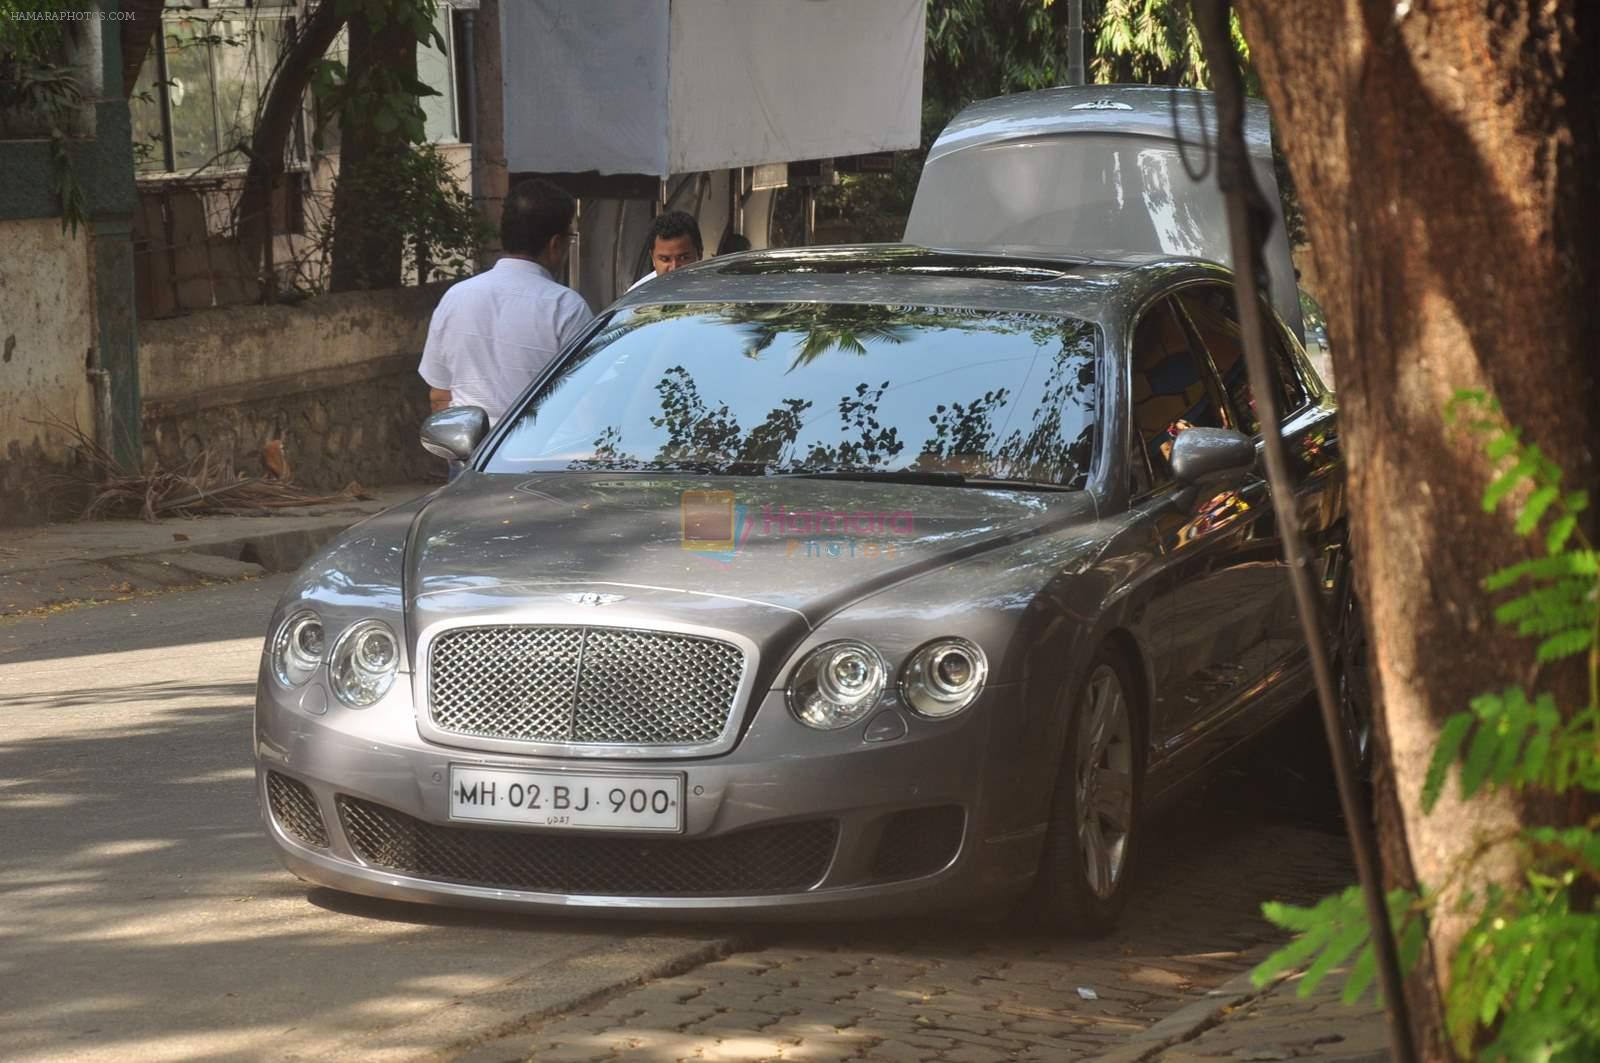 Akshay Kumar's car breaks down in Bandra, Mumbai on 15th May 2015